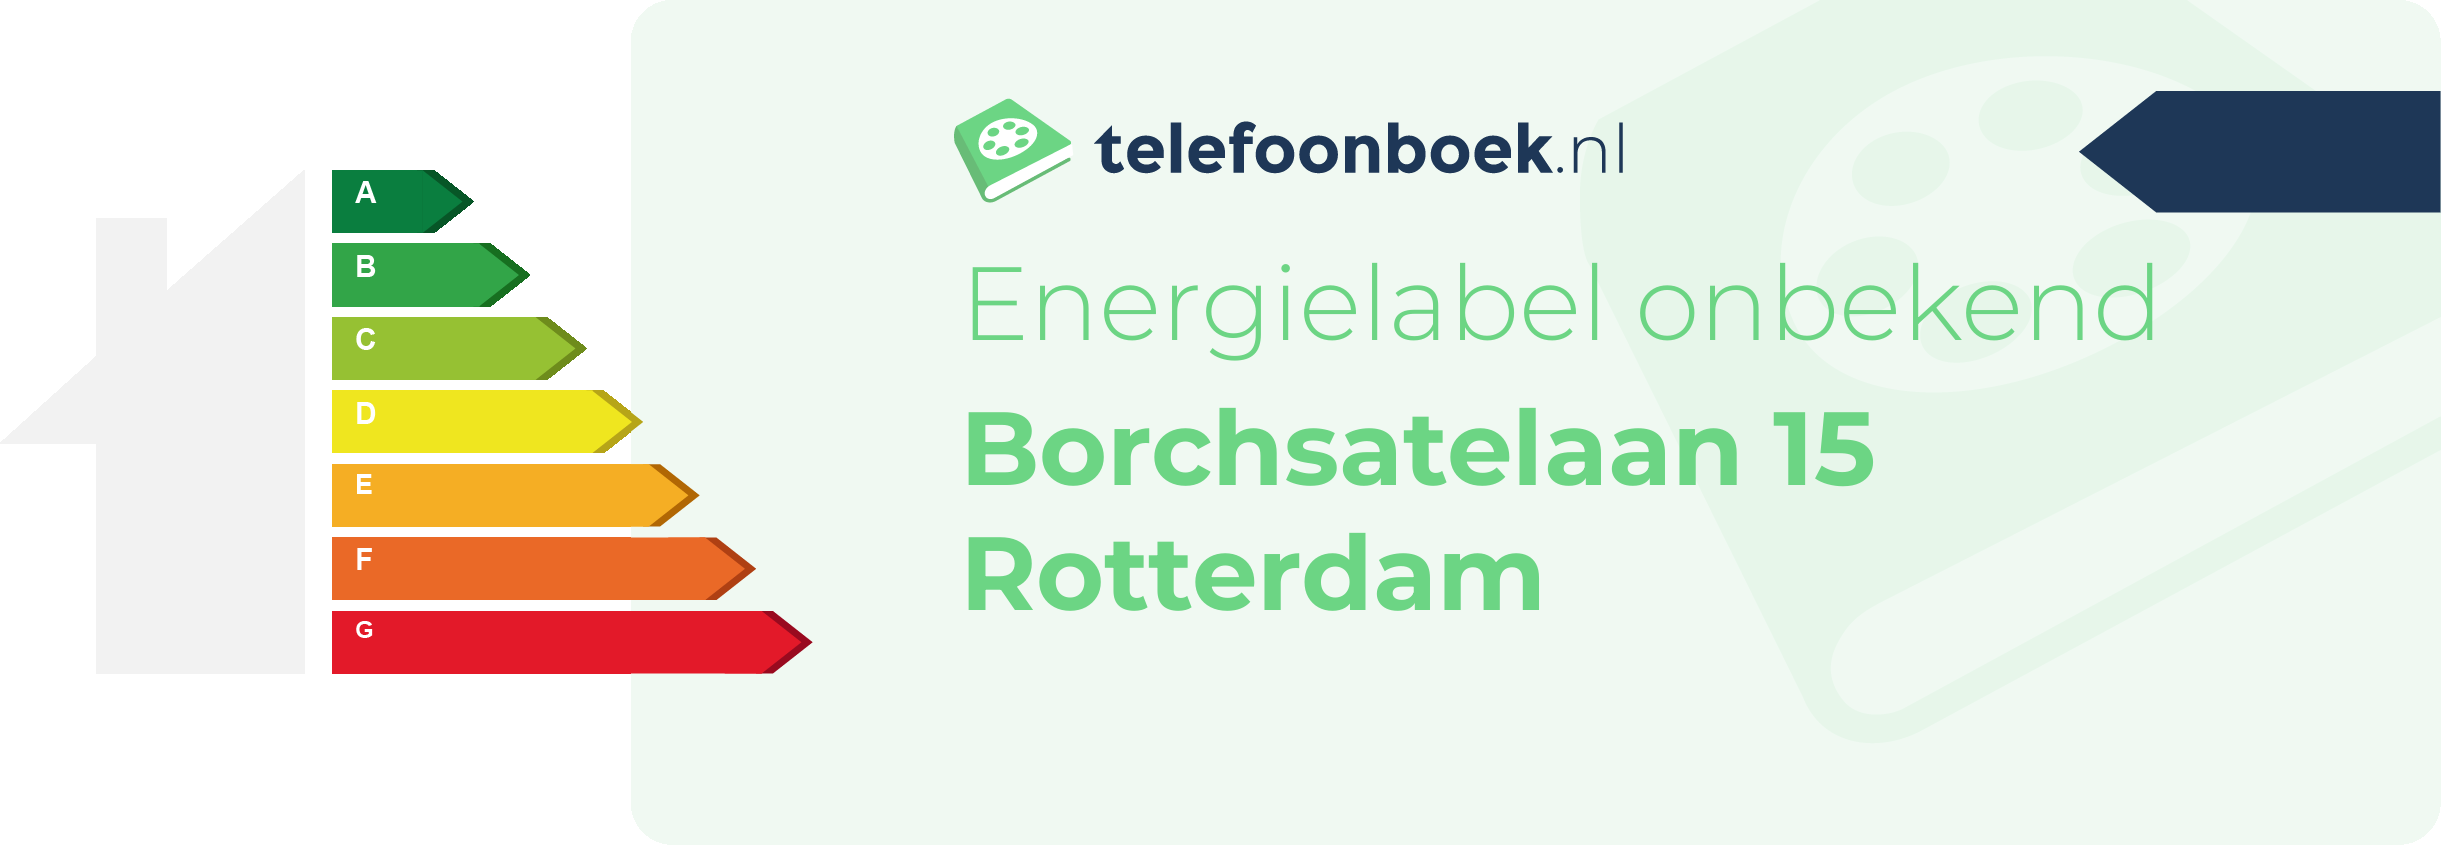 Energielabel Borchsatelaan 15 Rotterdam